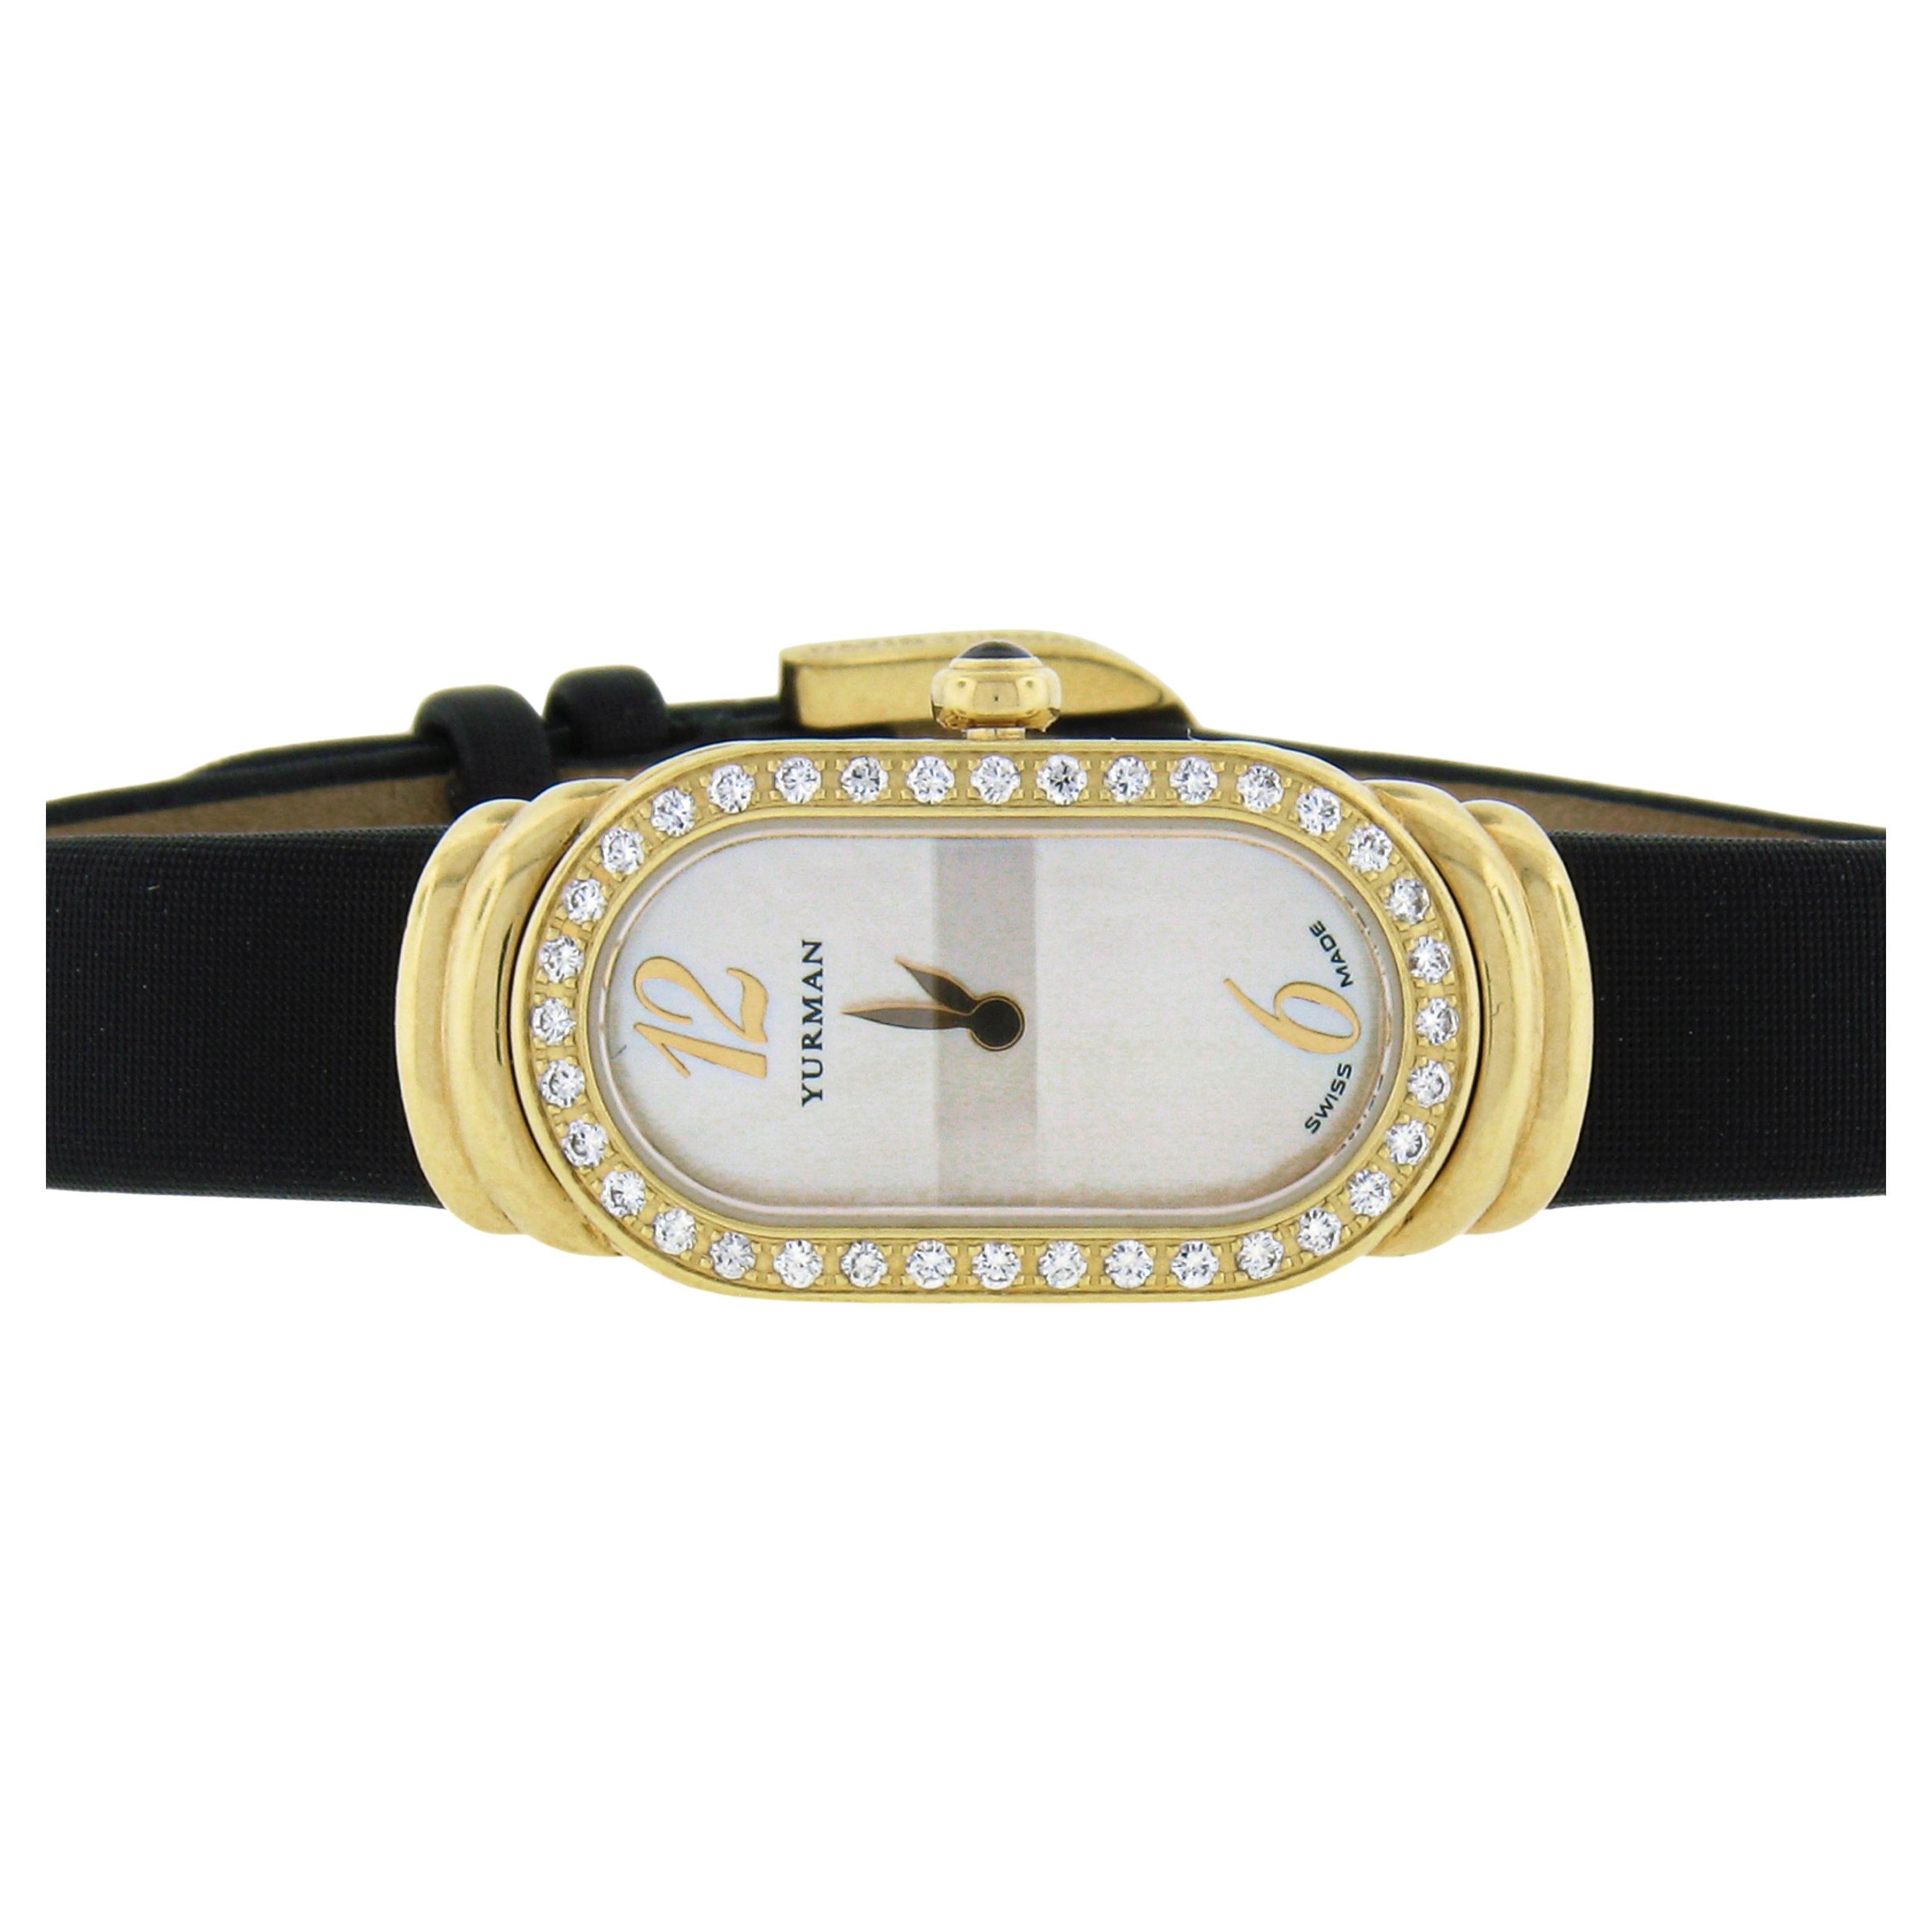 David Yurman Madison Petite 18k Gold Diamond Bezel MOP Dial Wrist Watch T409-P88 For Sale